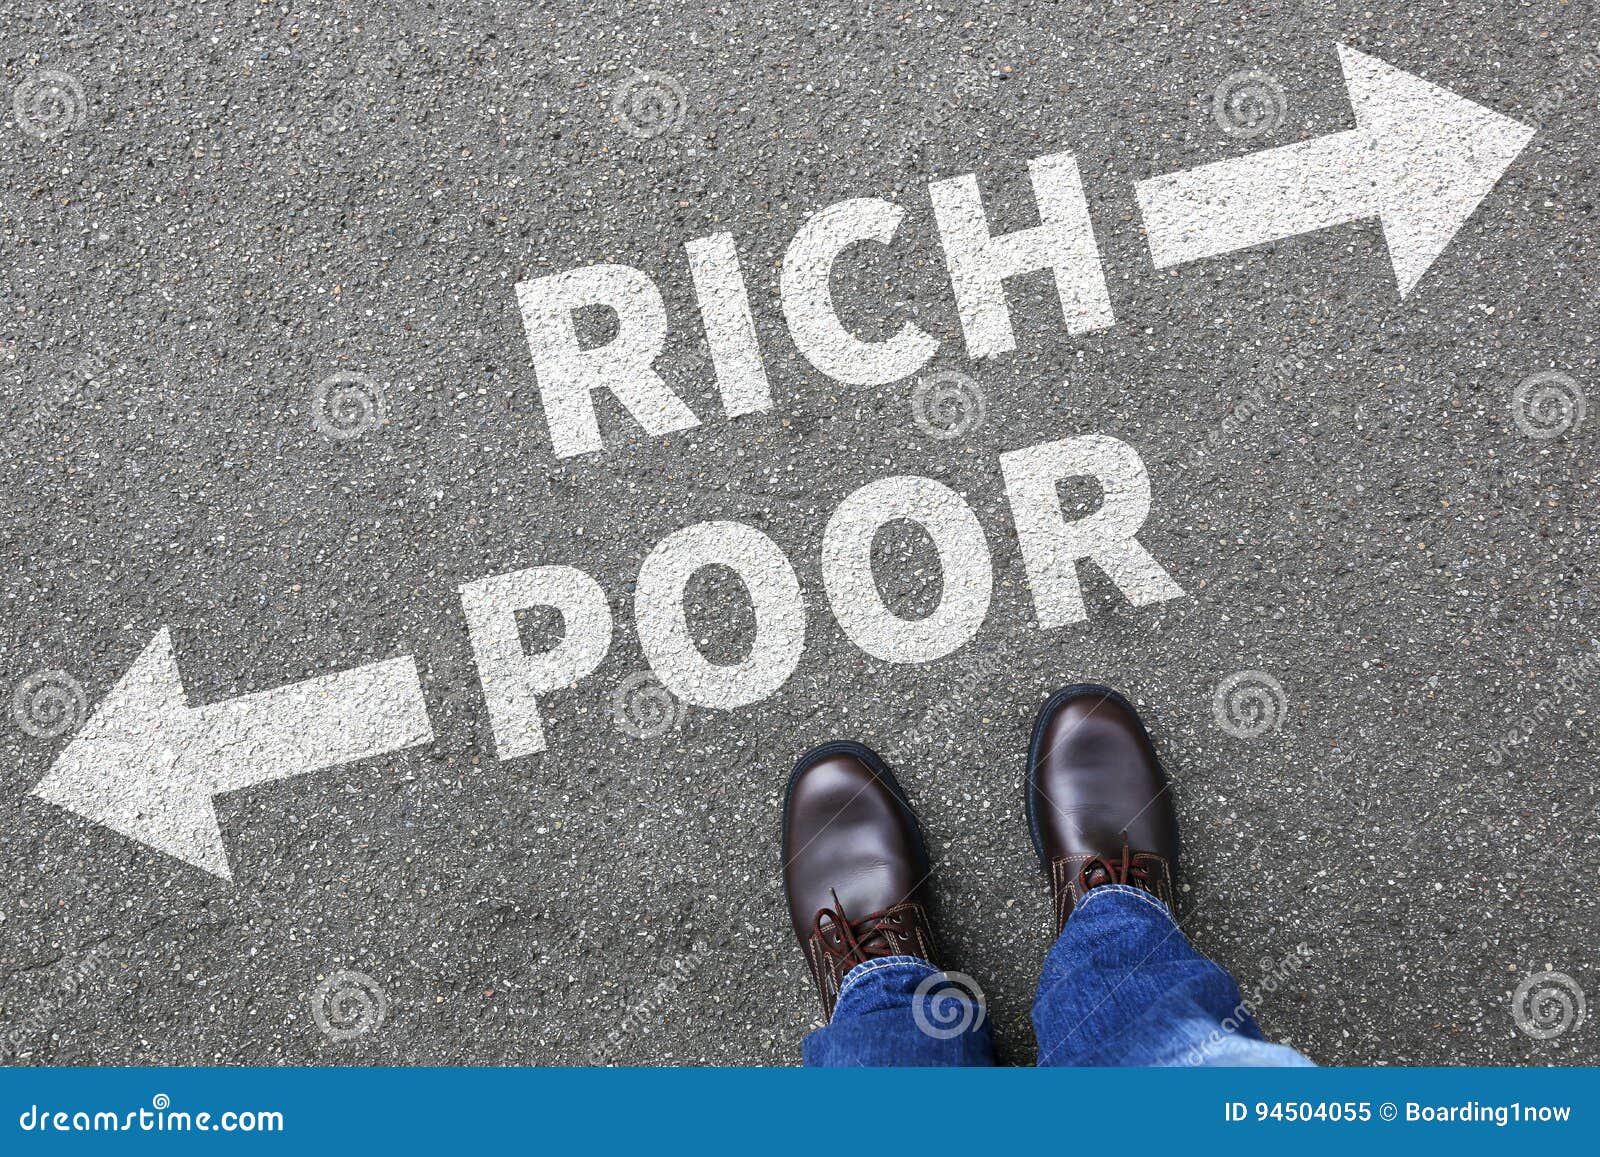 poor rich poverty finances financial success successful money bu